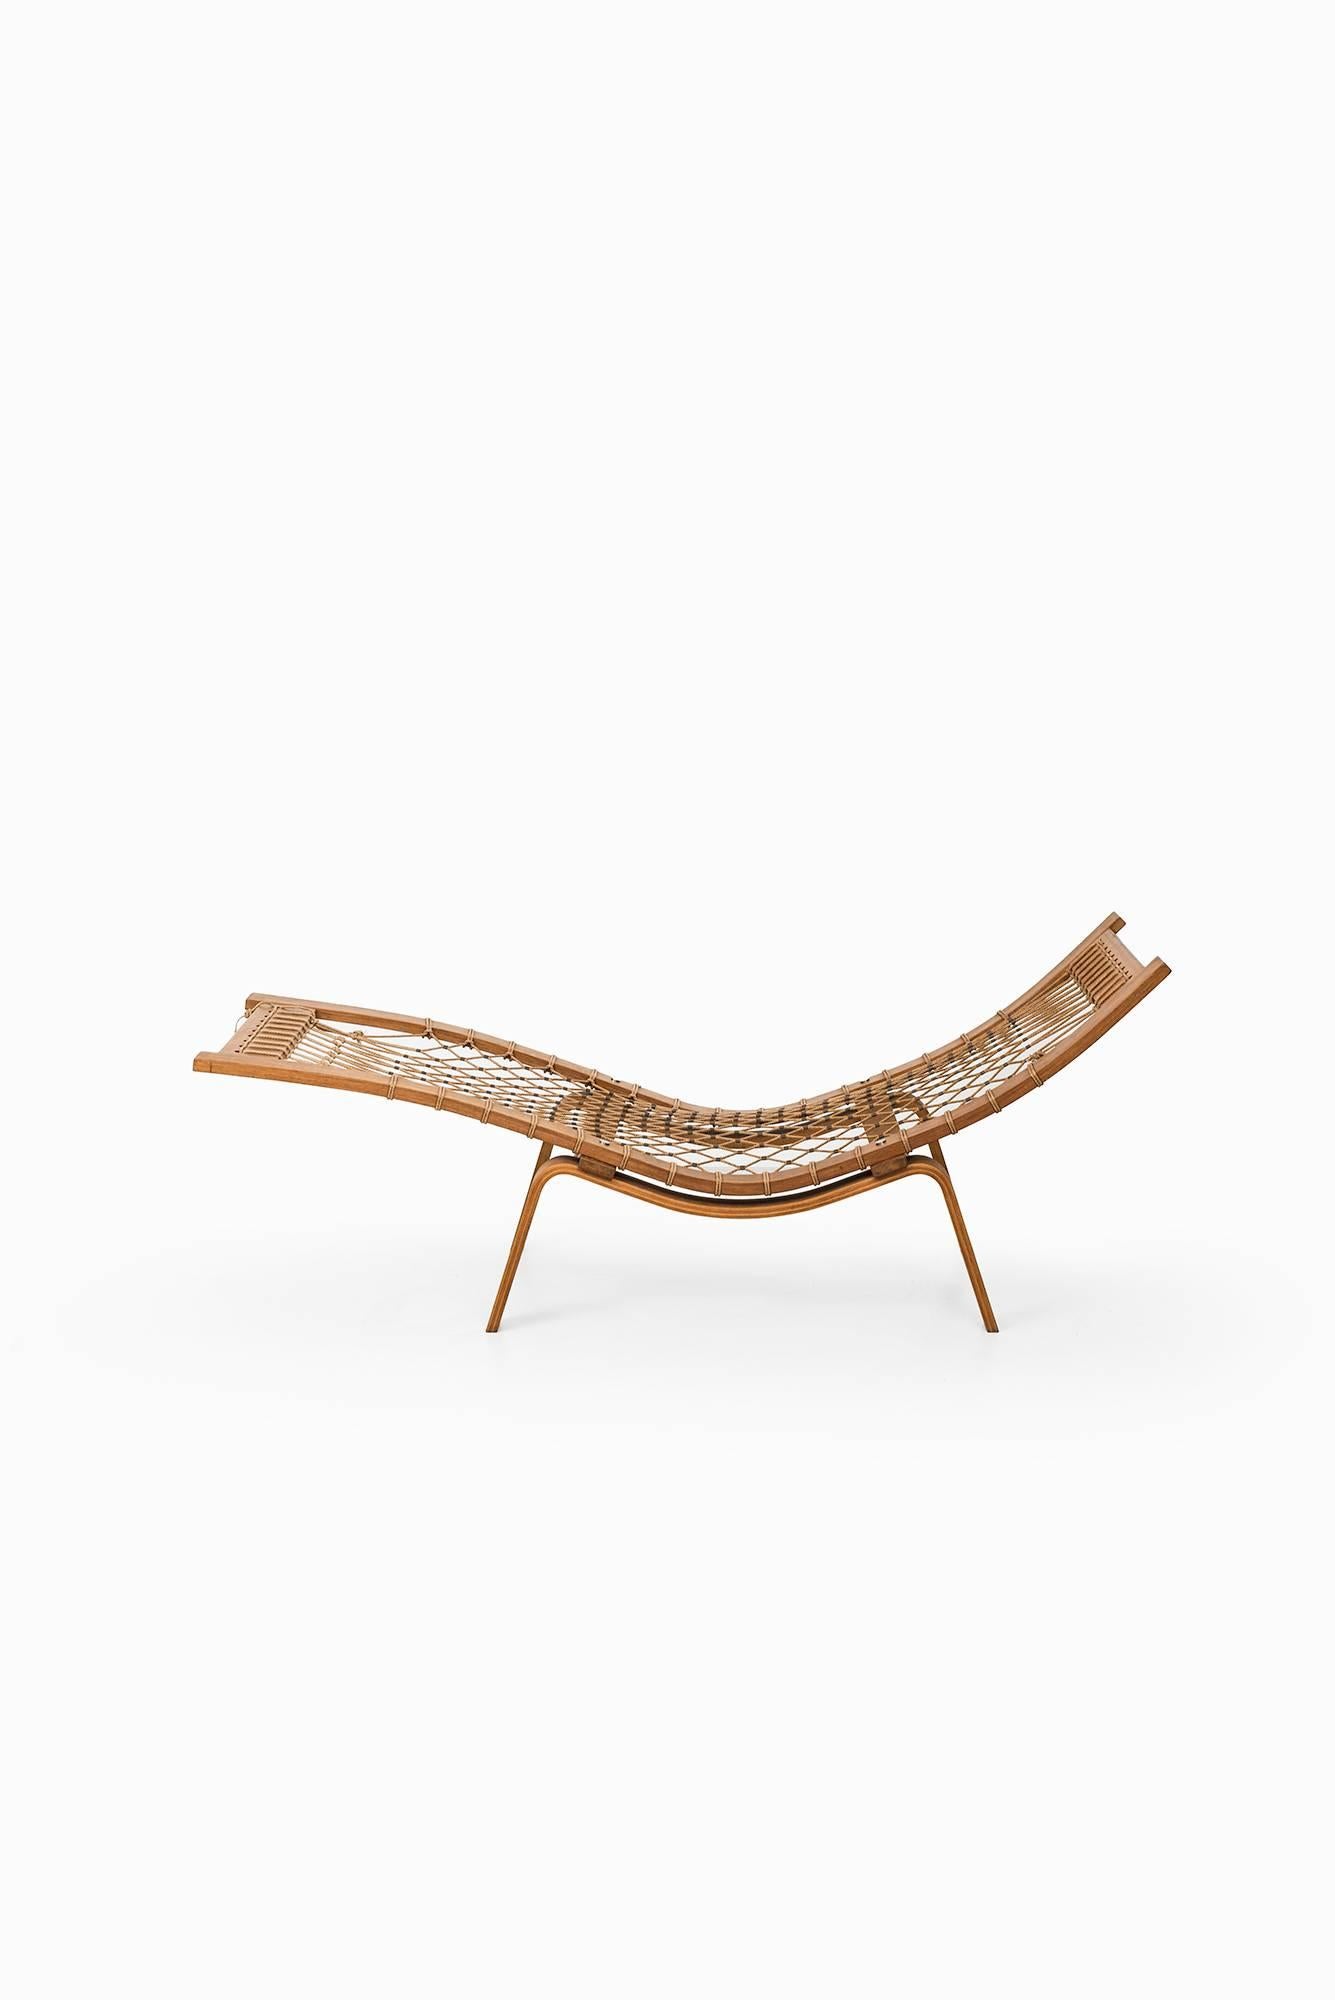 Very rare lounge chair model GE-2 / Hammock chair designed by Hans Wegner. Produced by GETAMA in Denmark.